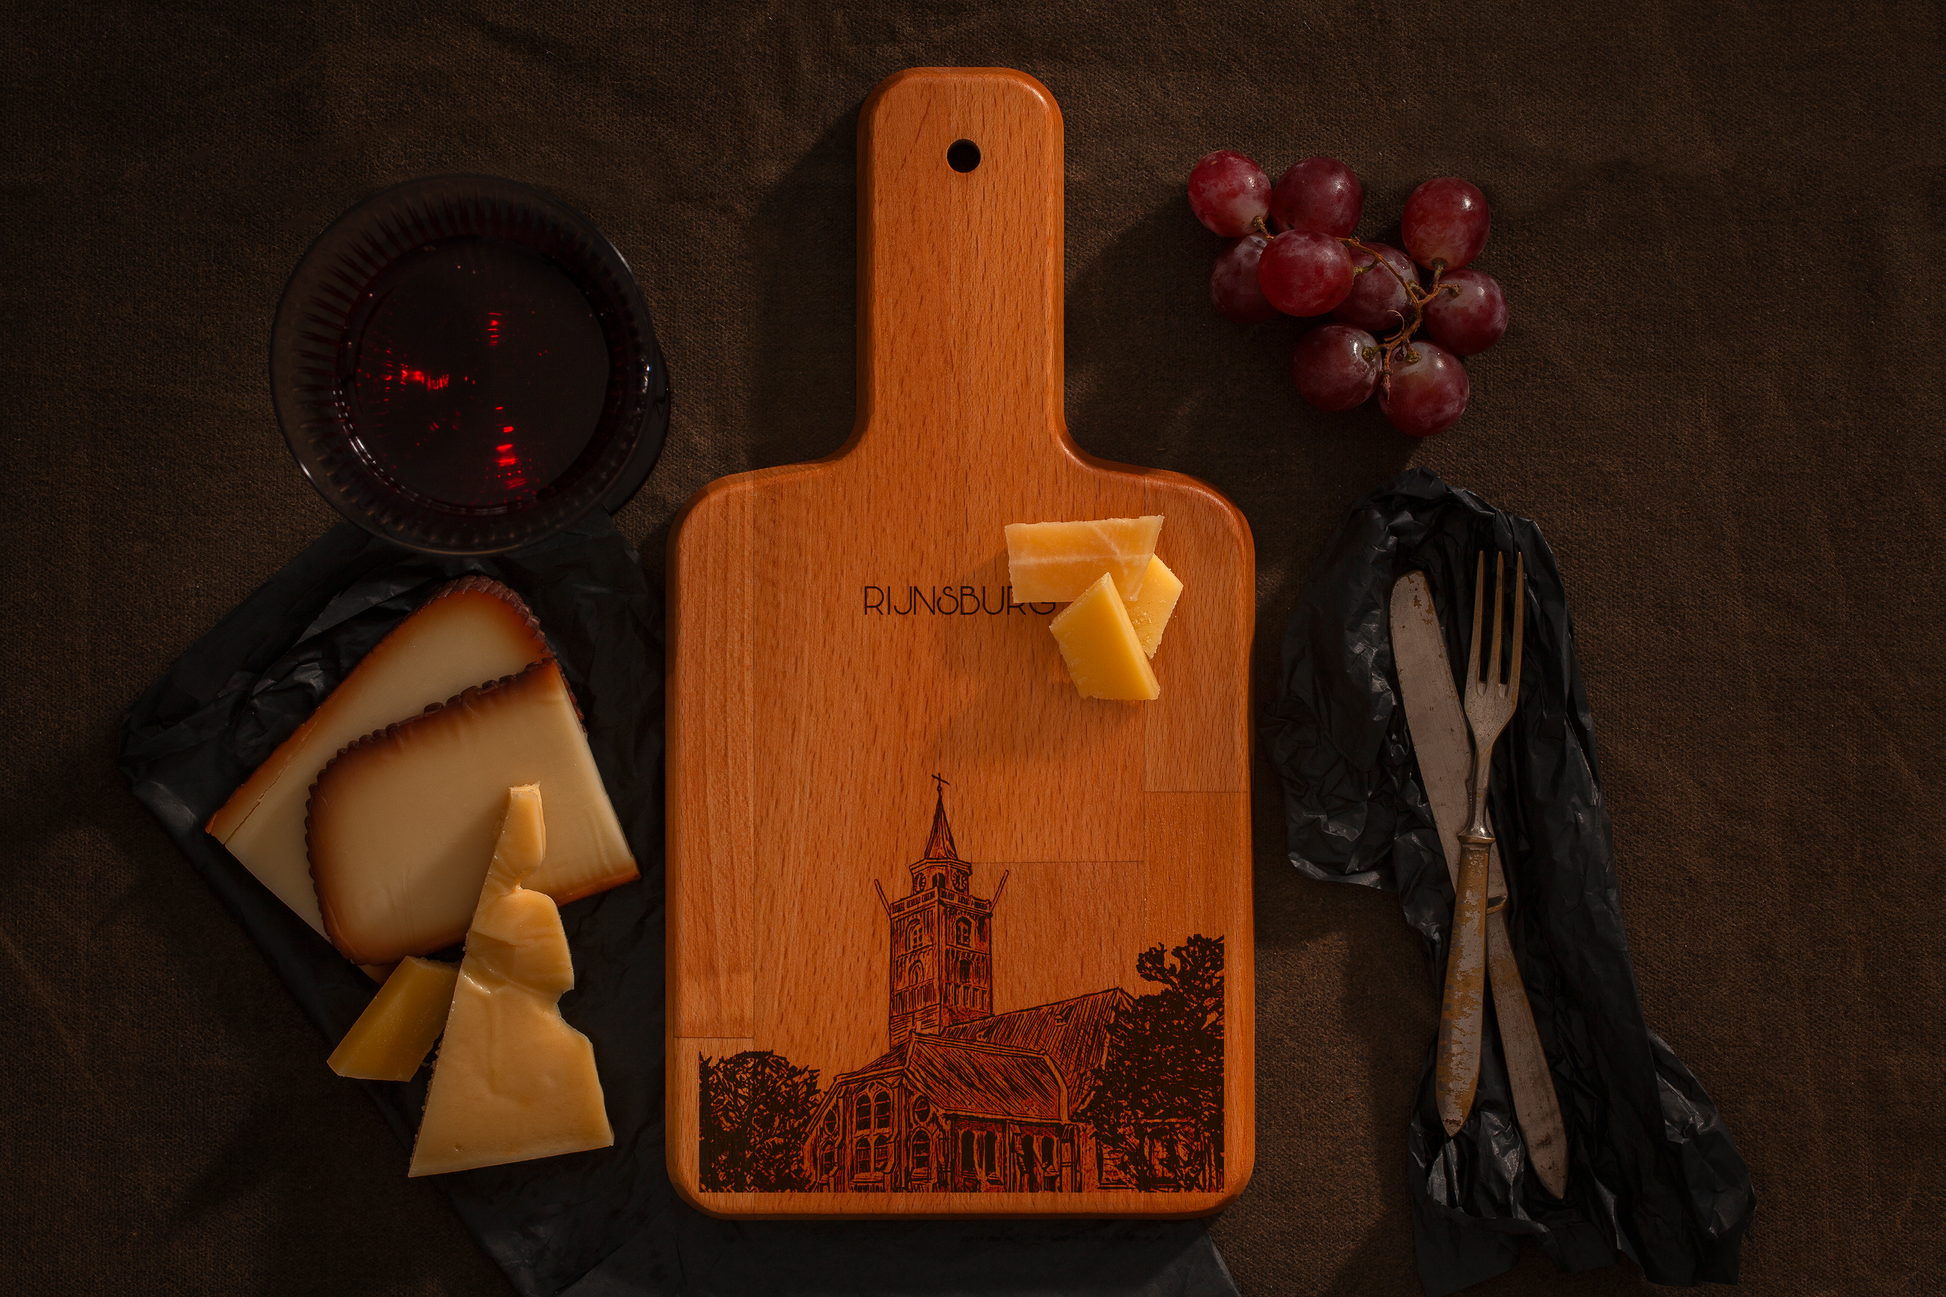 Rijnsburg, Grote Kerk, cheese board, with cheese